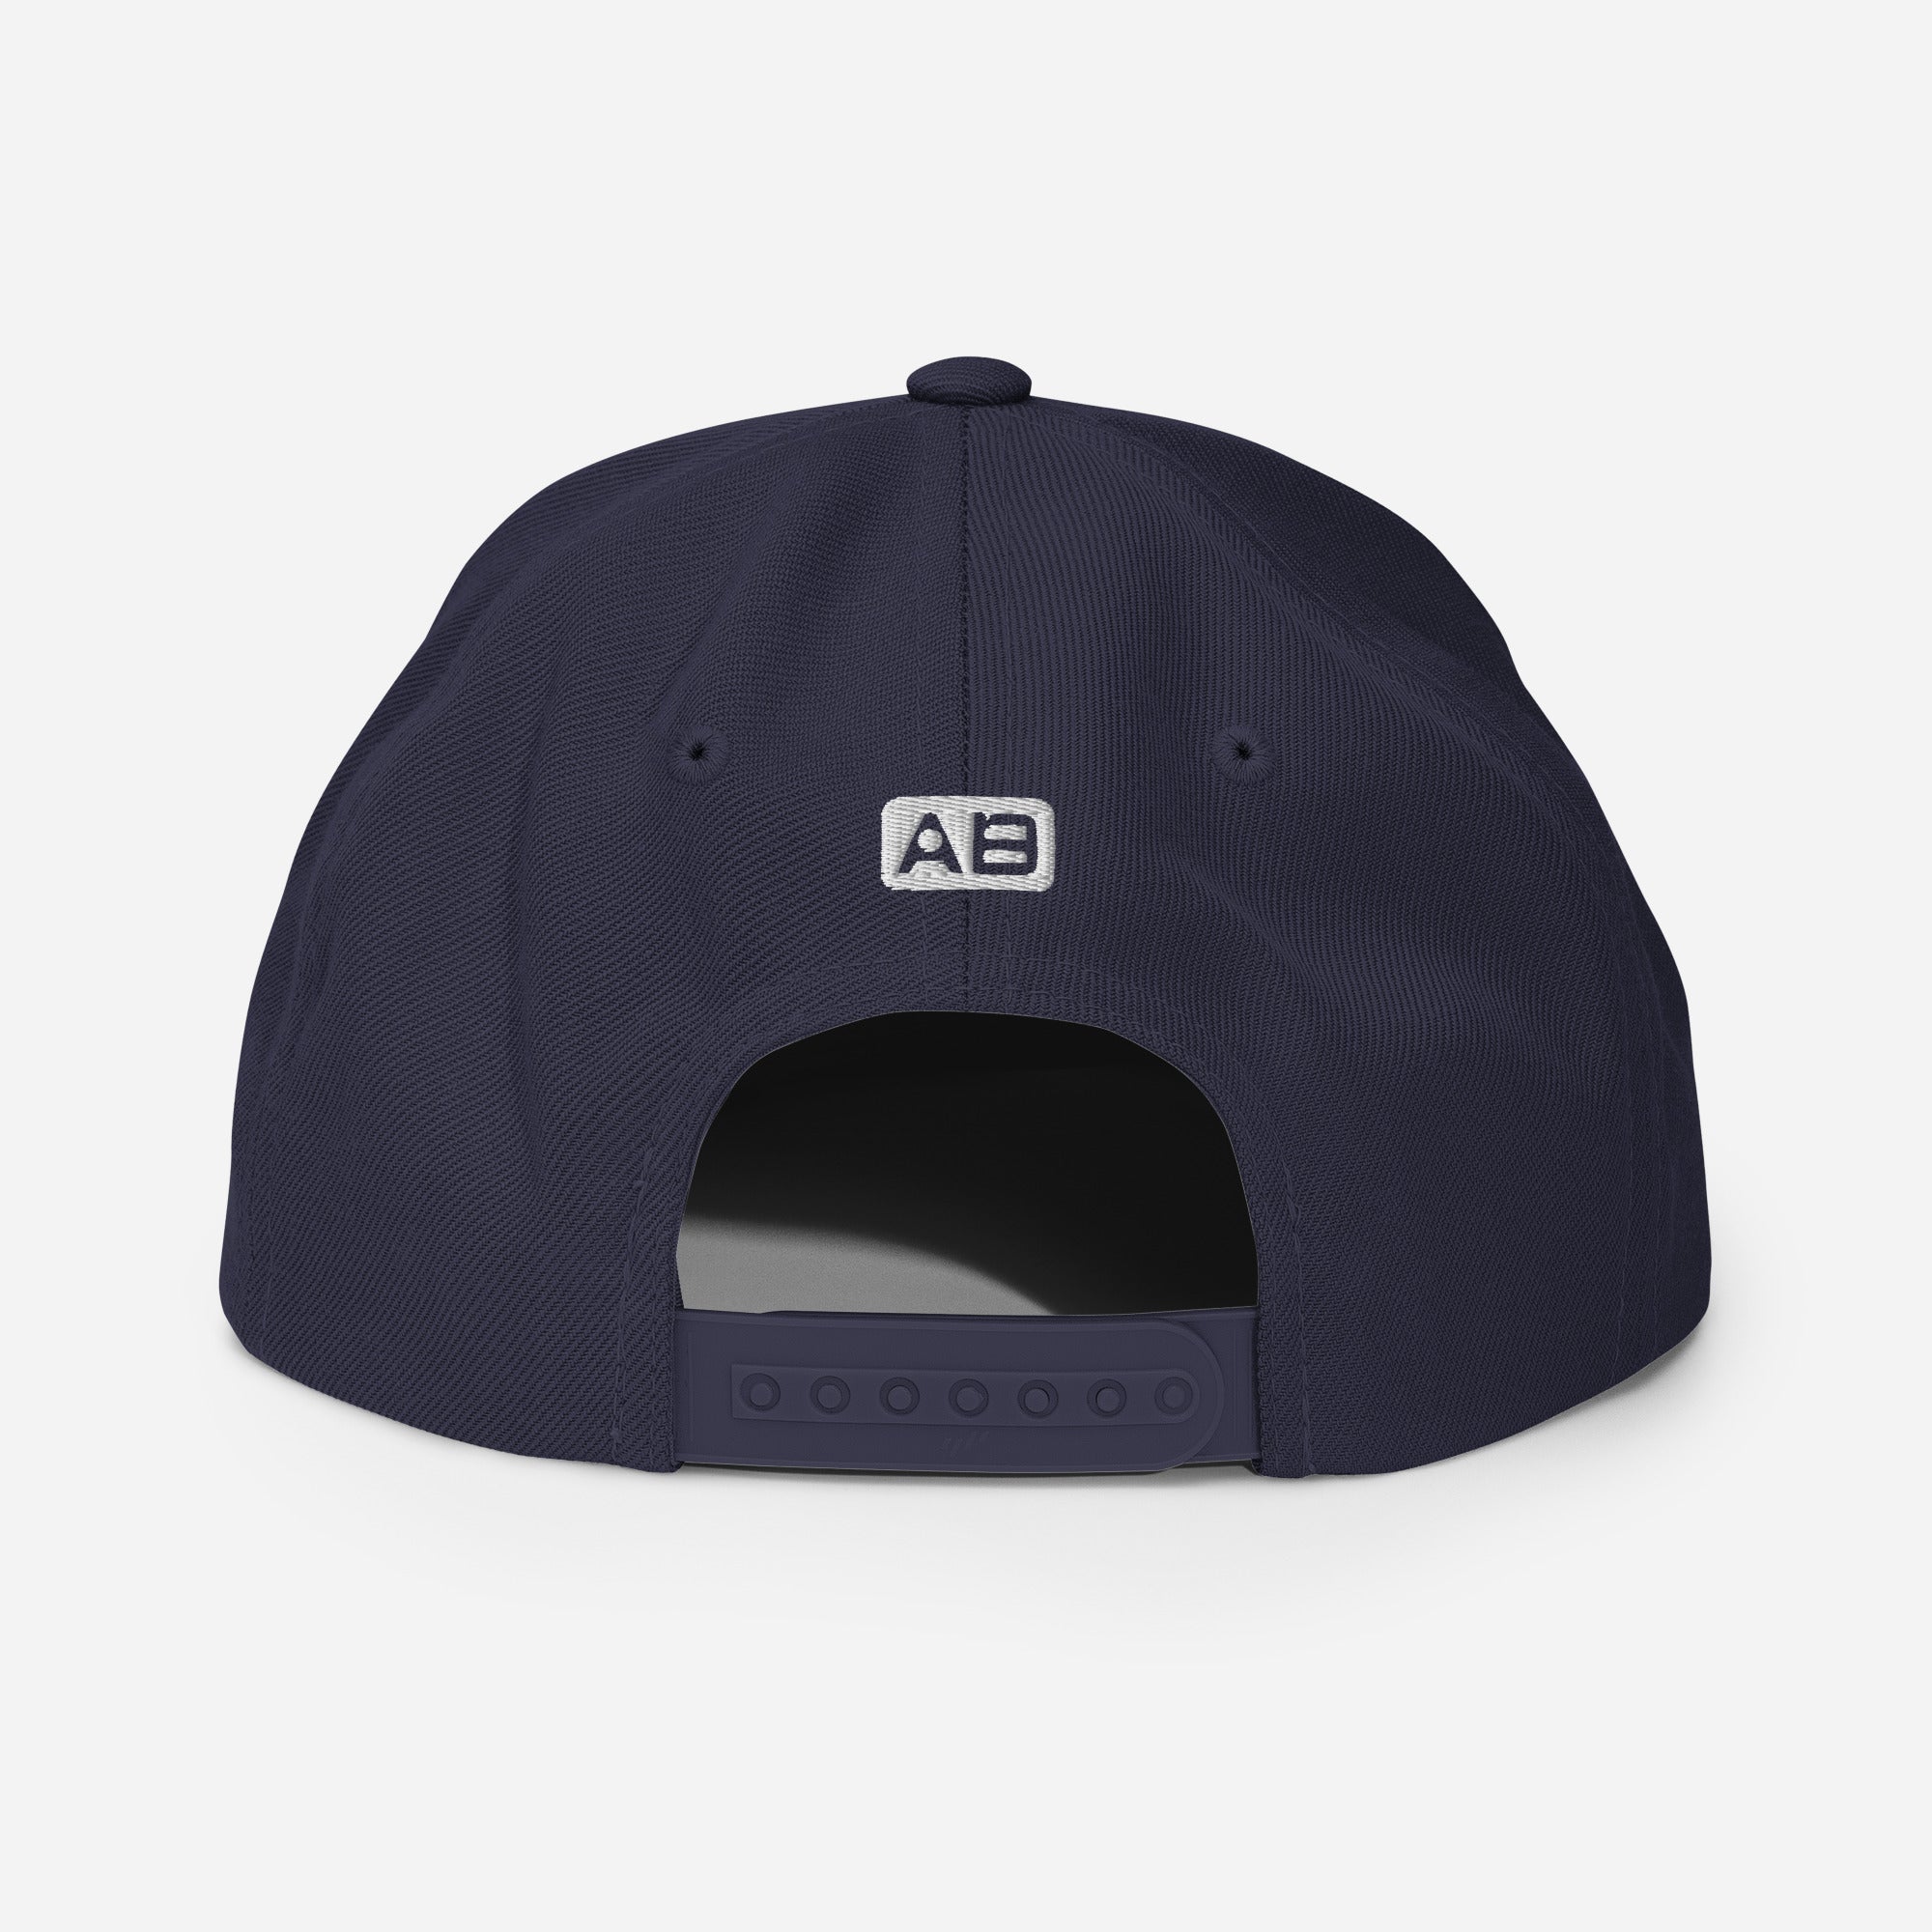 AB Snapback Hat